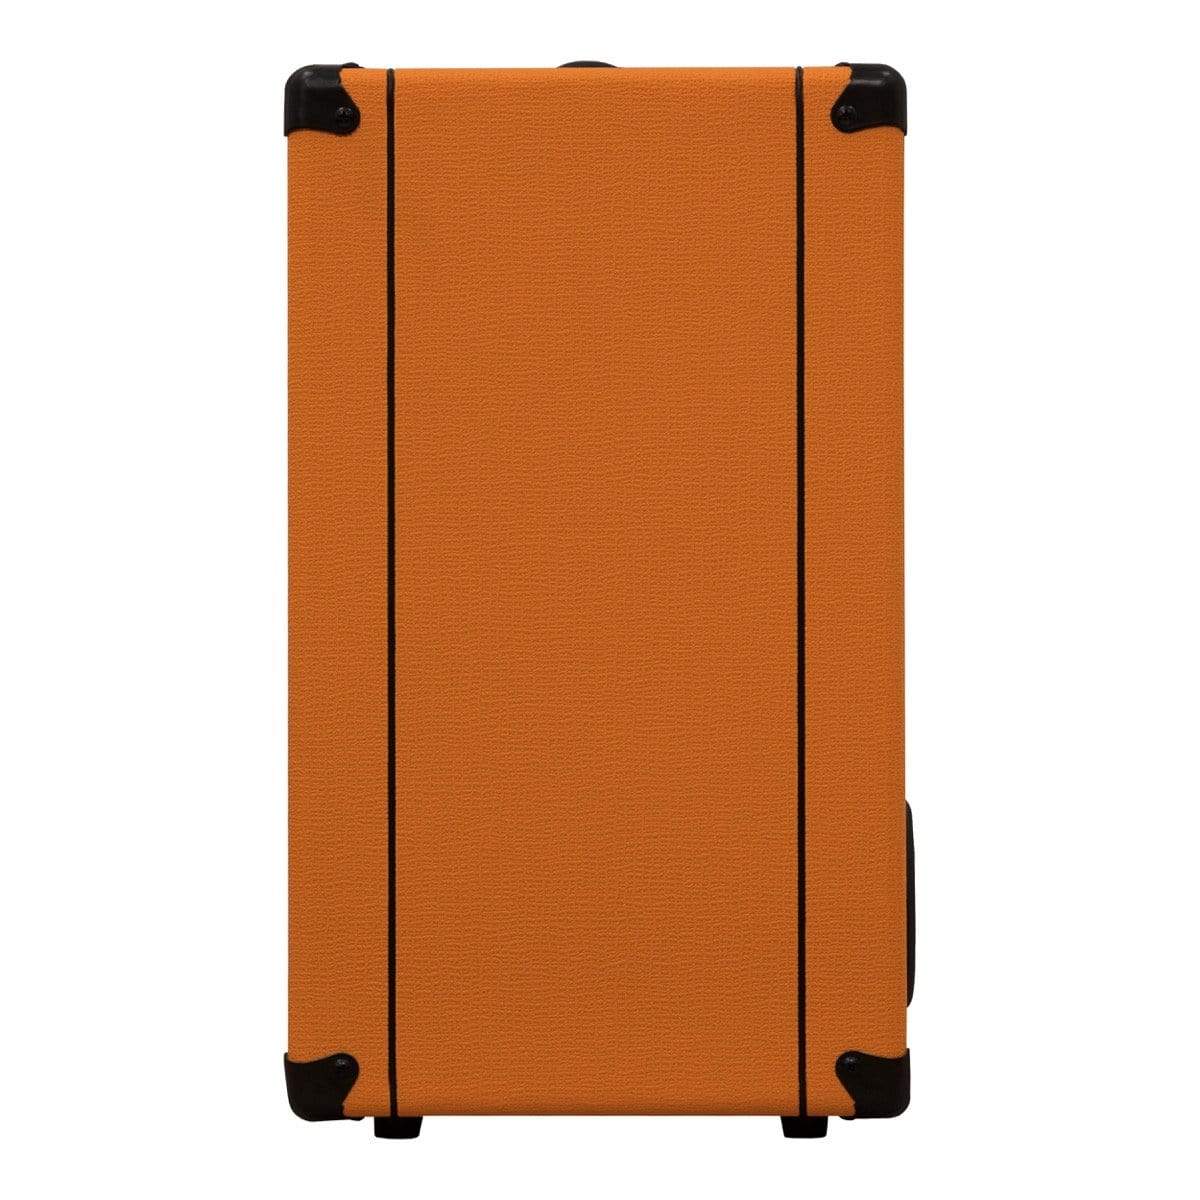 Orange Crush Bass 50 Bass Combo Amplifier (50 Watts, 1x12 Inch), Orange